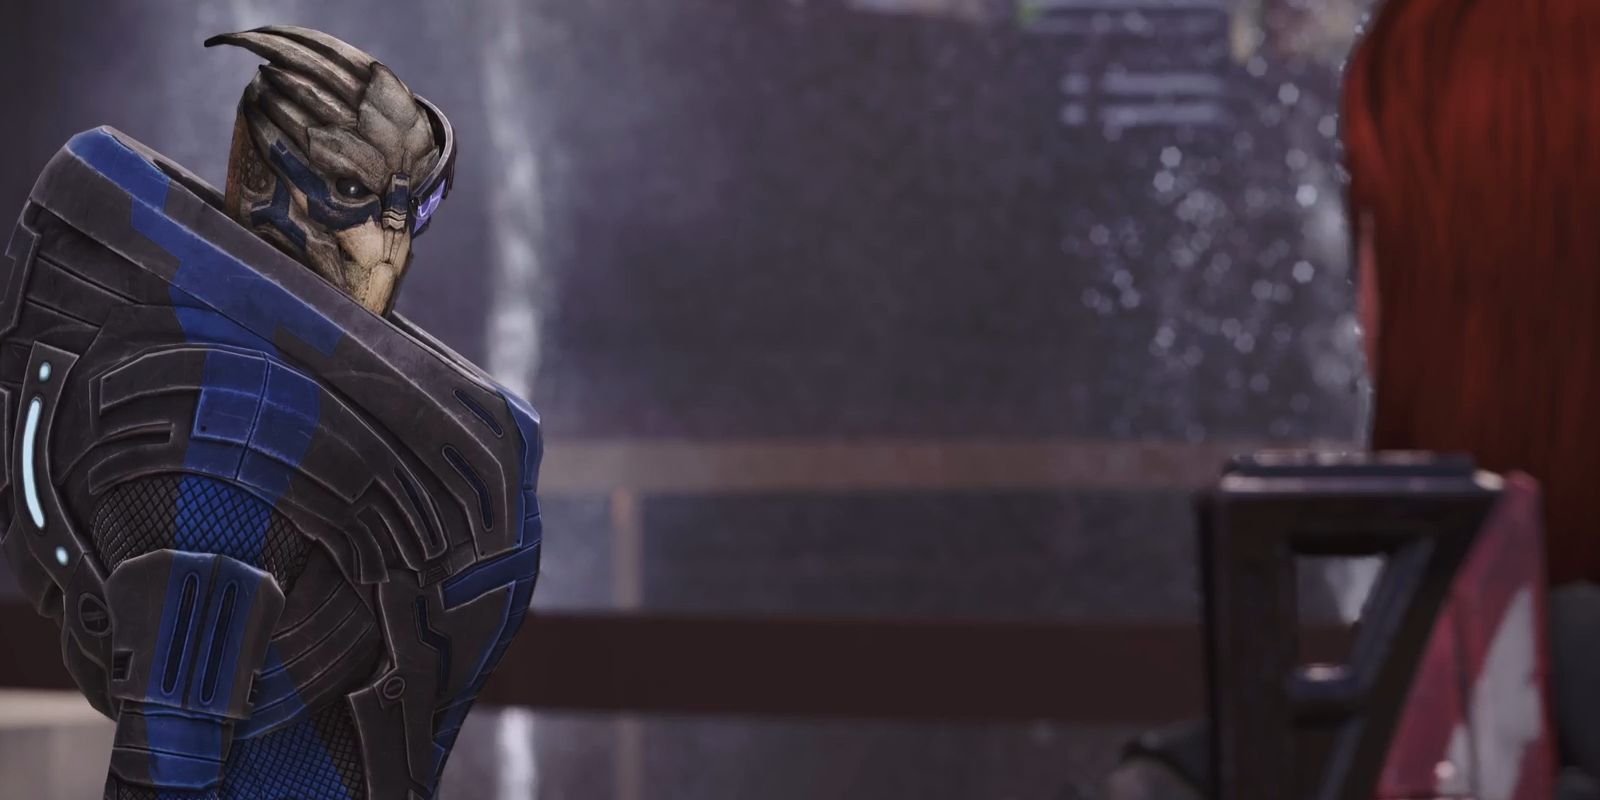 Mass Effect Guide: The Citadel Exploration & Recruitment